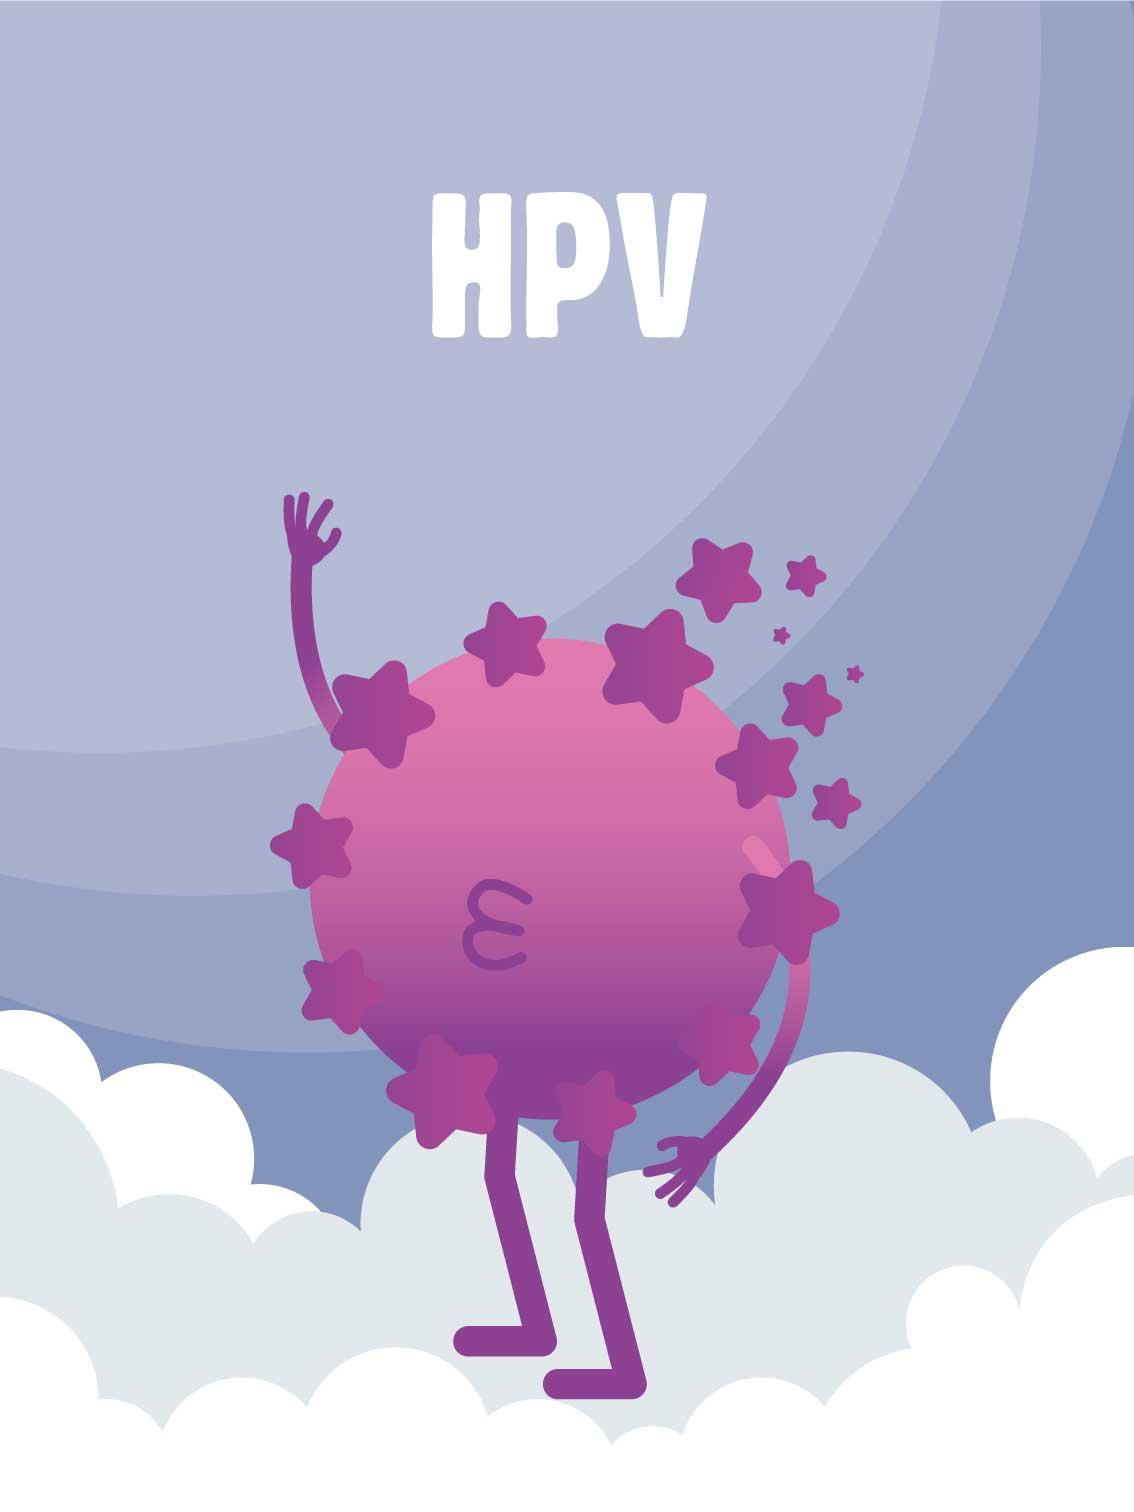 Papillomavirus: symptoms of the HPV virus, screening test, vaccine